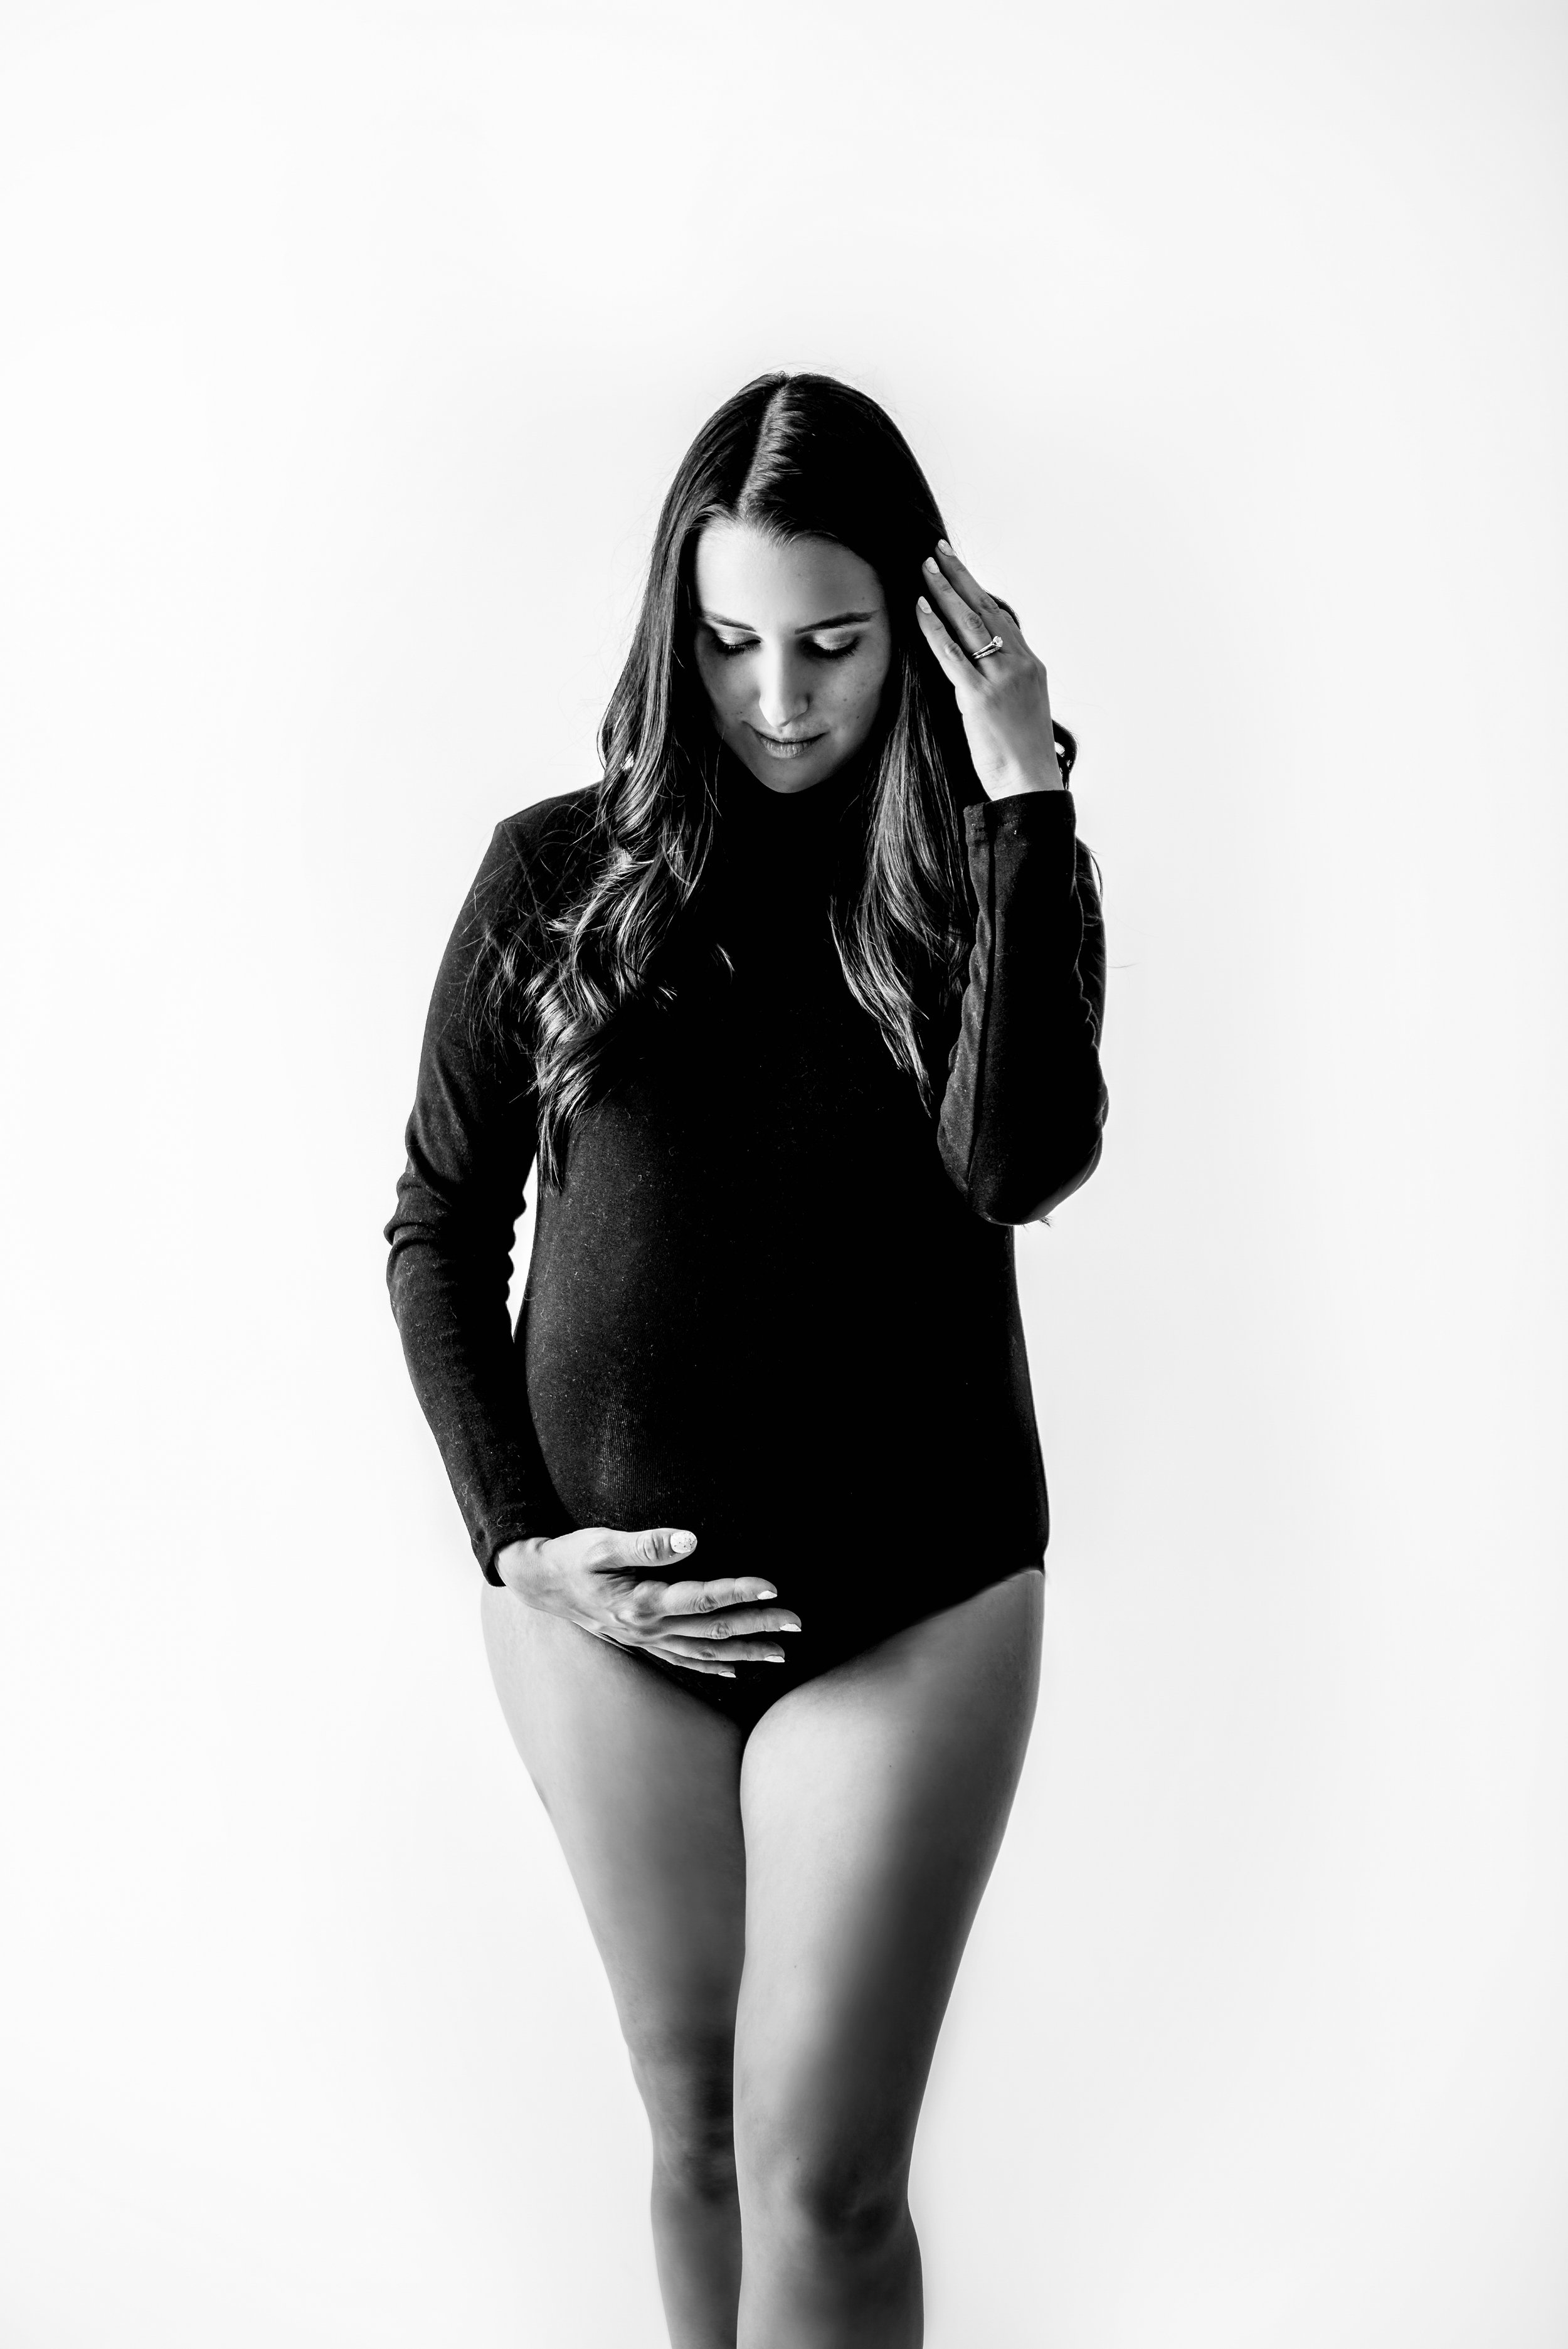 b&w studio maternity photography in san antonio